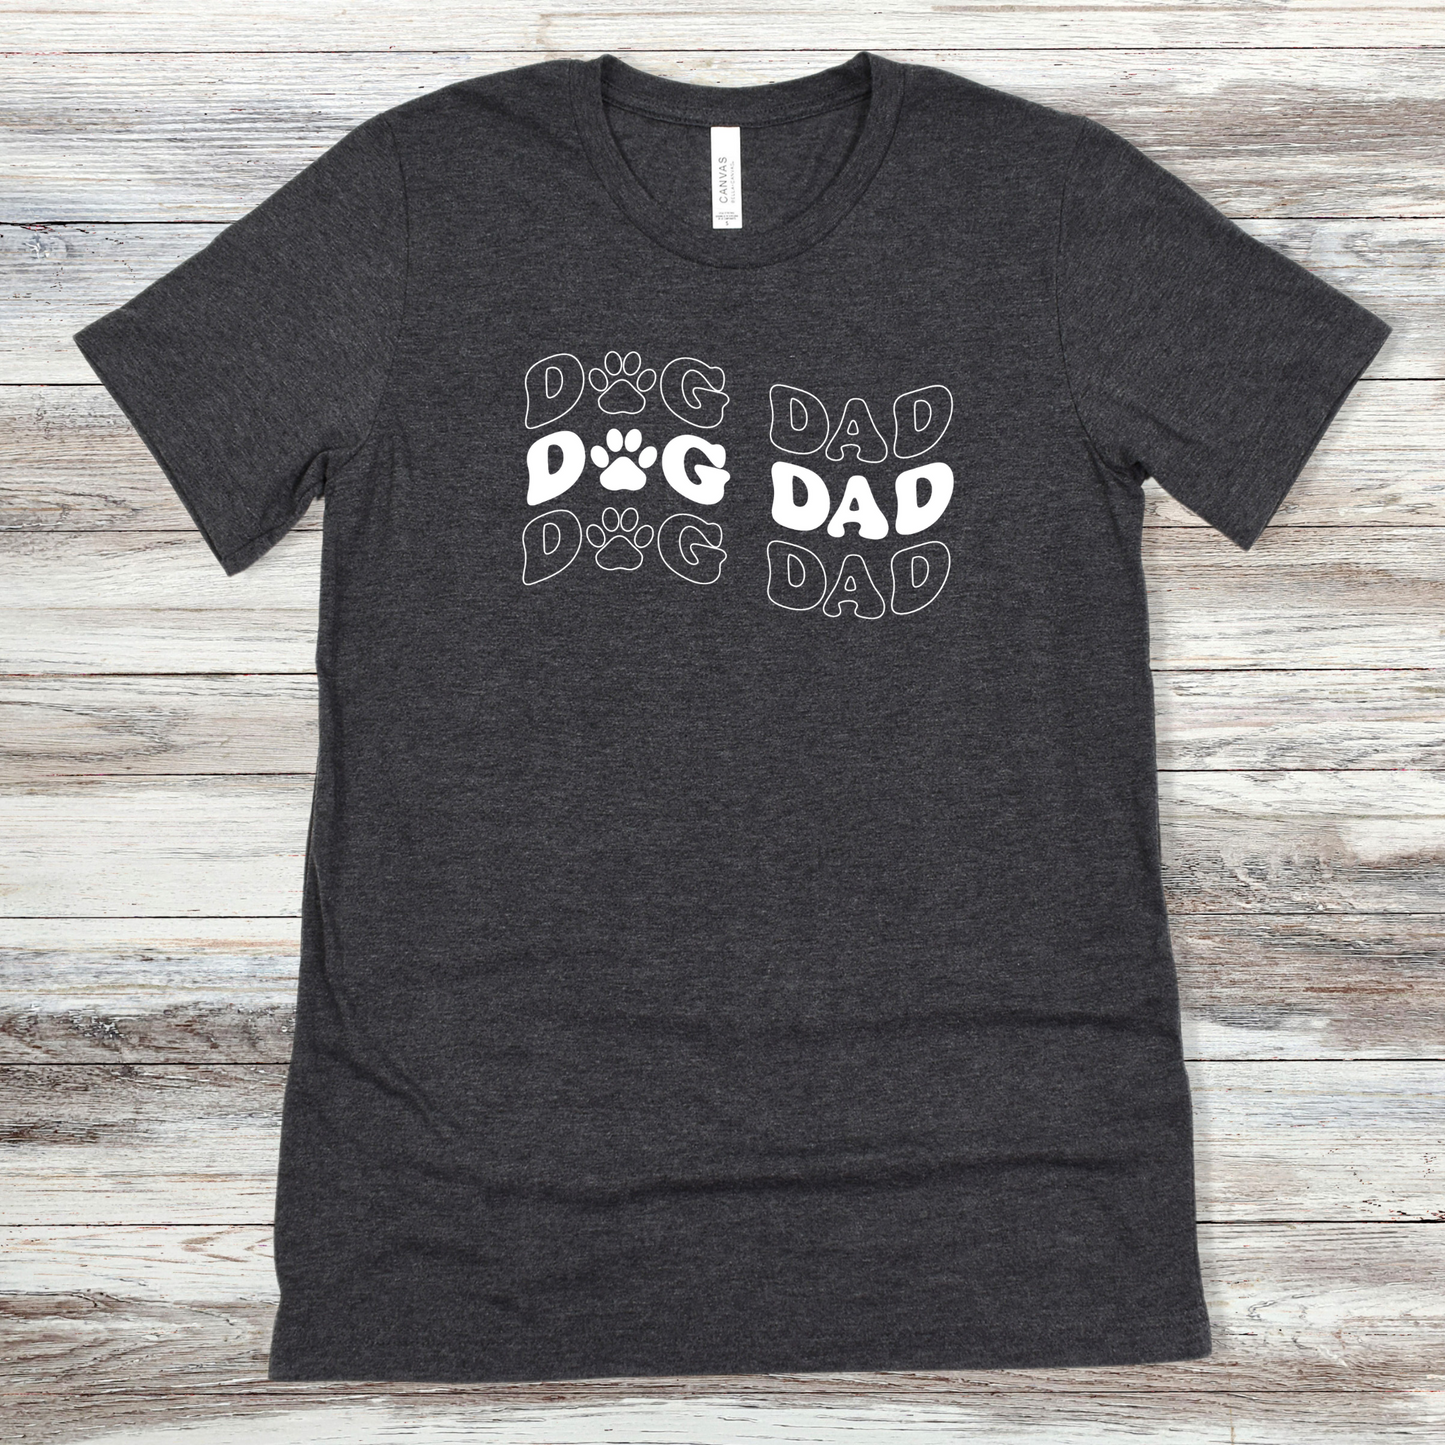 Text reading "Dog Dad" on a Dark Grey Heather Tee